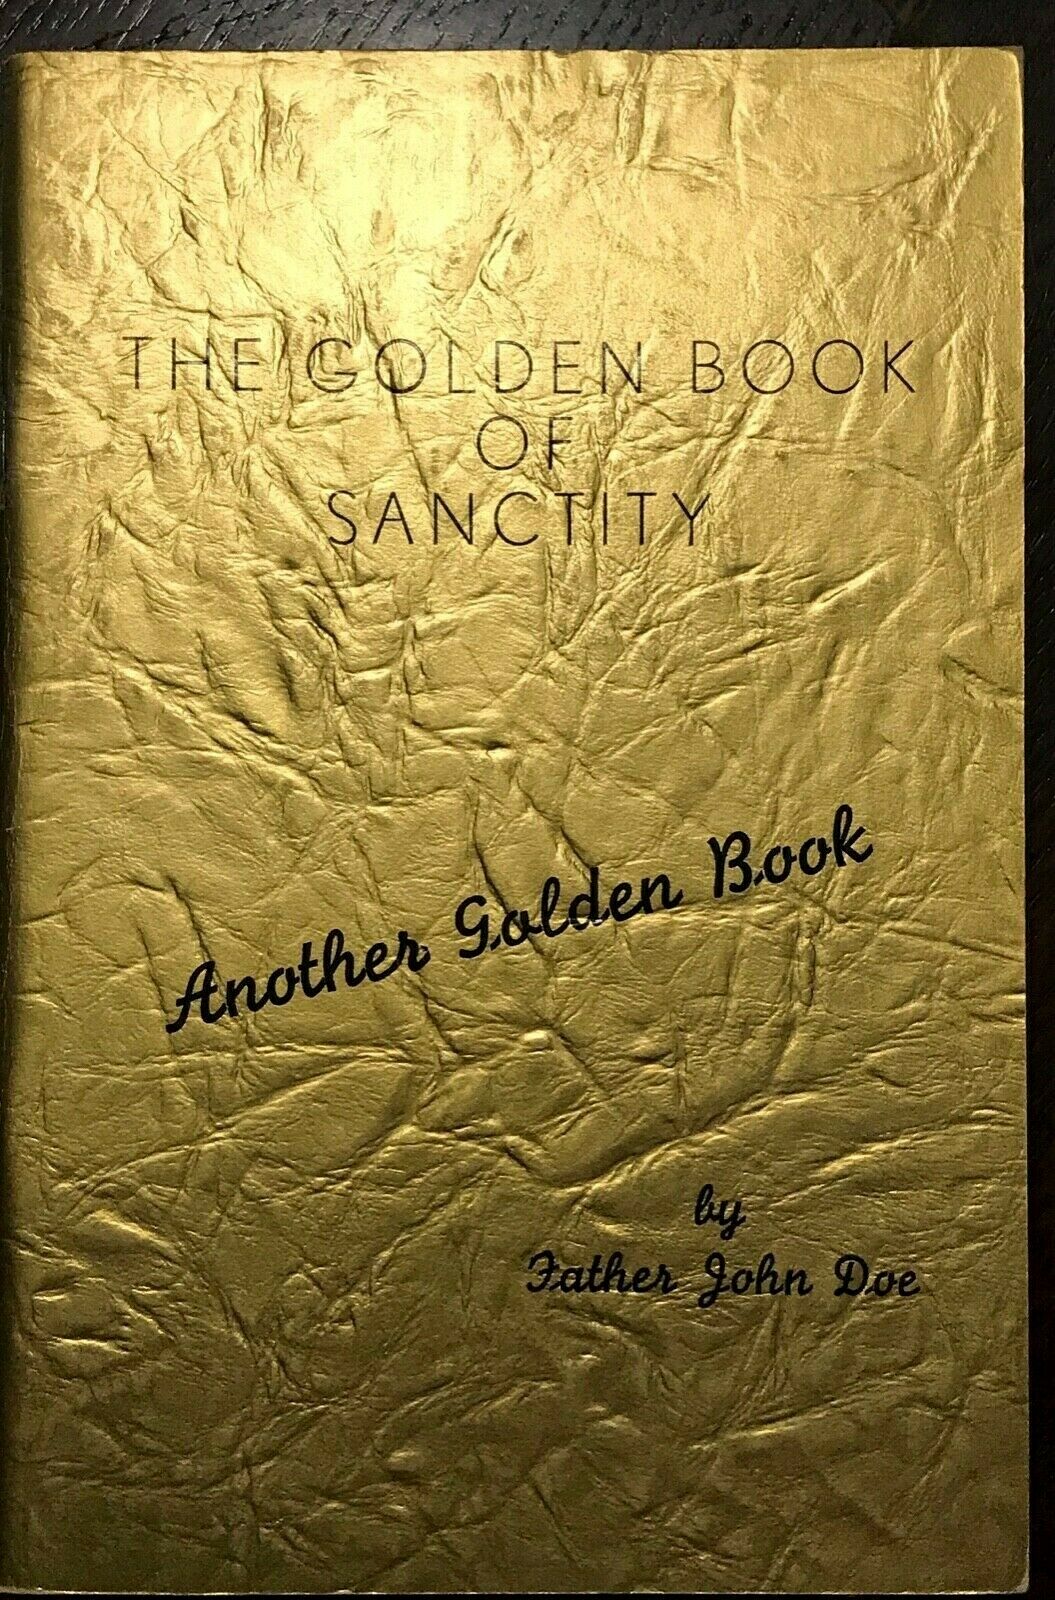 ALCOHOLICS ANONYMOUS AA - Pfau / John Doe - GOLDEN BOOK OF SANCTITY, 1970